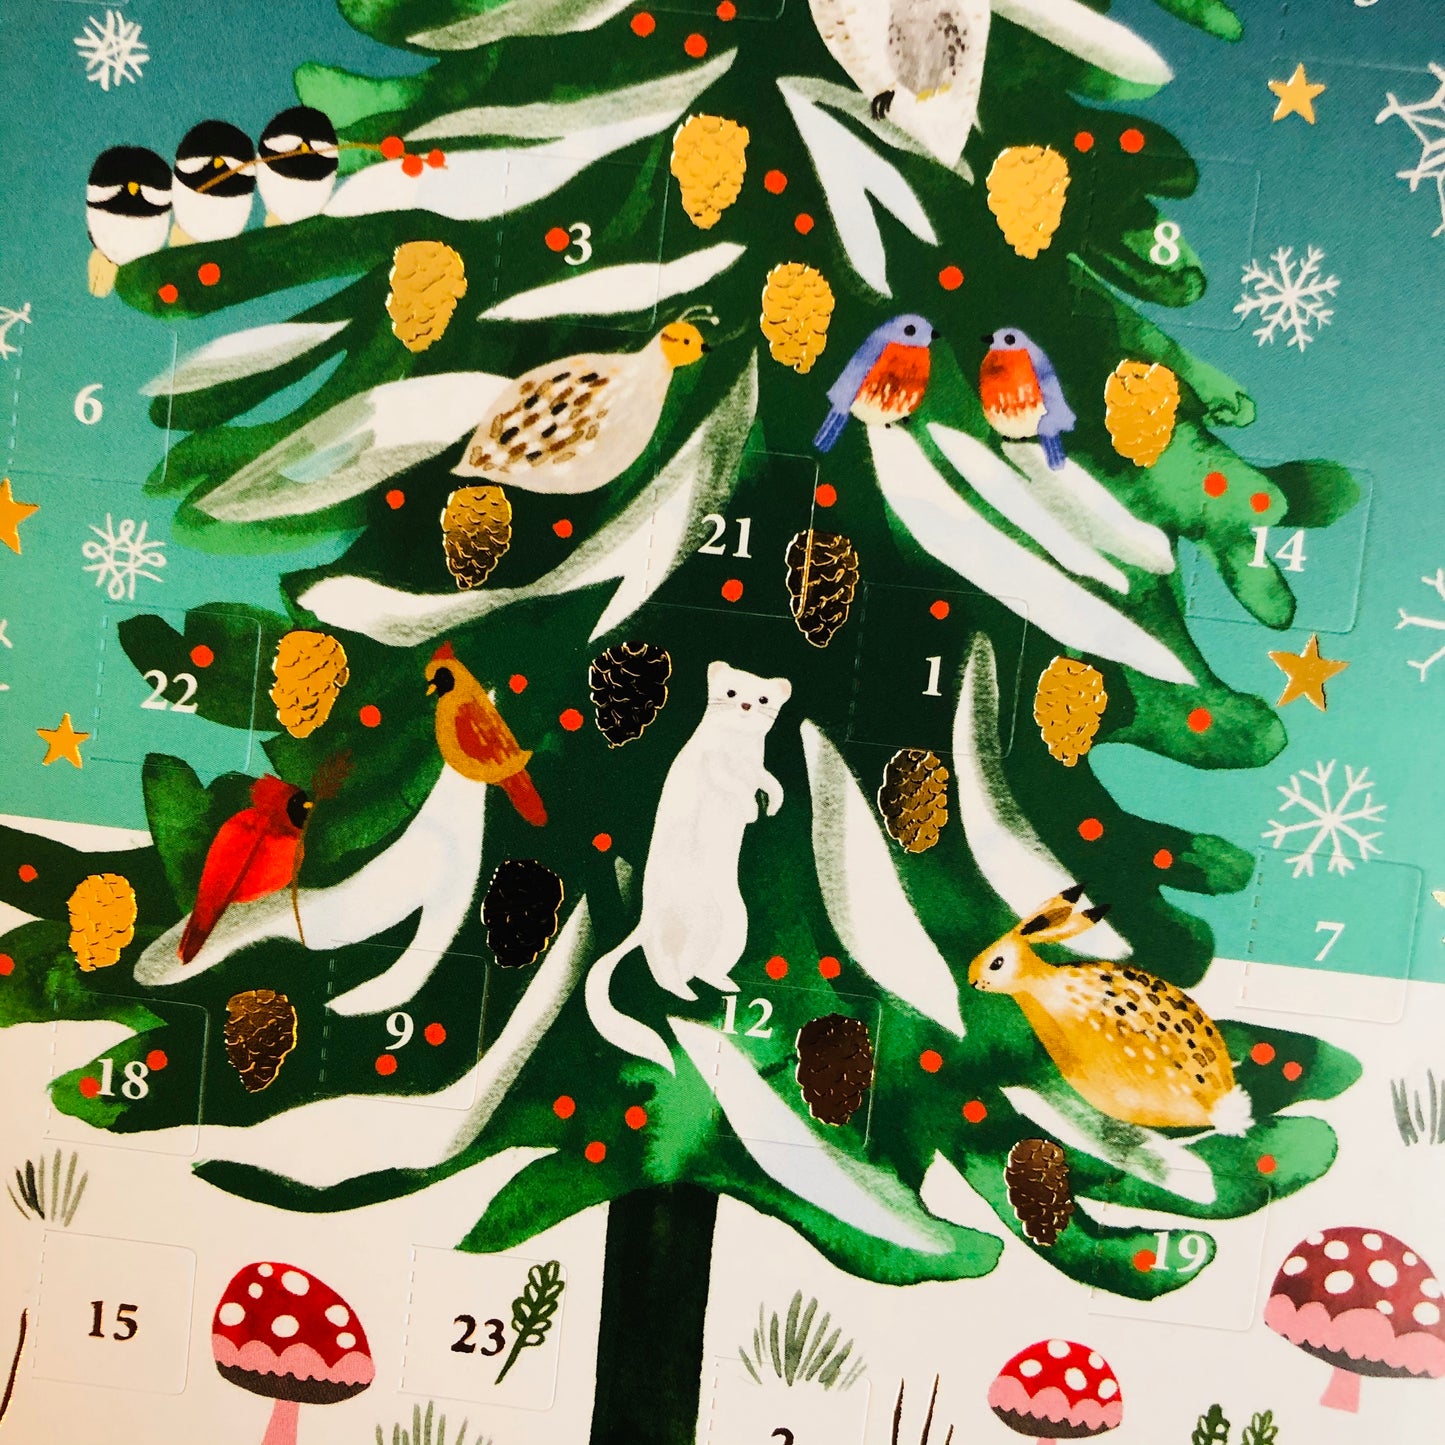 Christmas Conifer Mini Advent Calendar Card by Katie Vernon ACC079